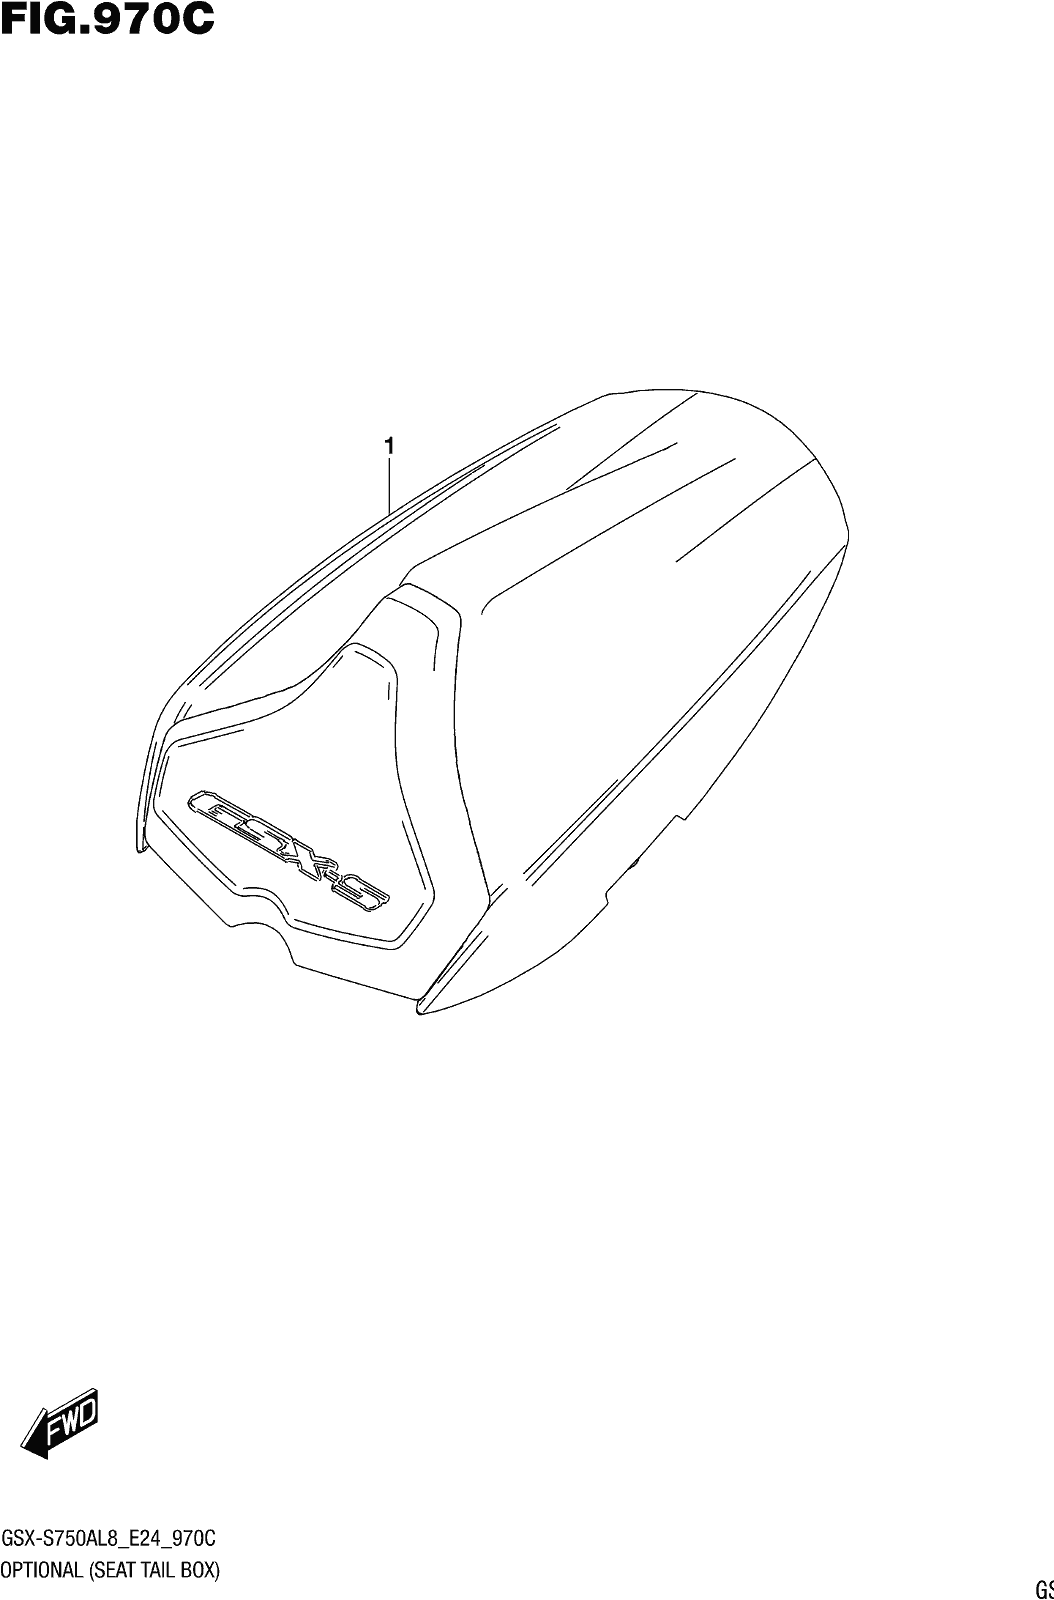 Fig.970c Optional (seat Tail Box)